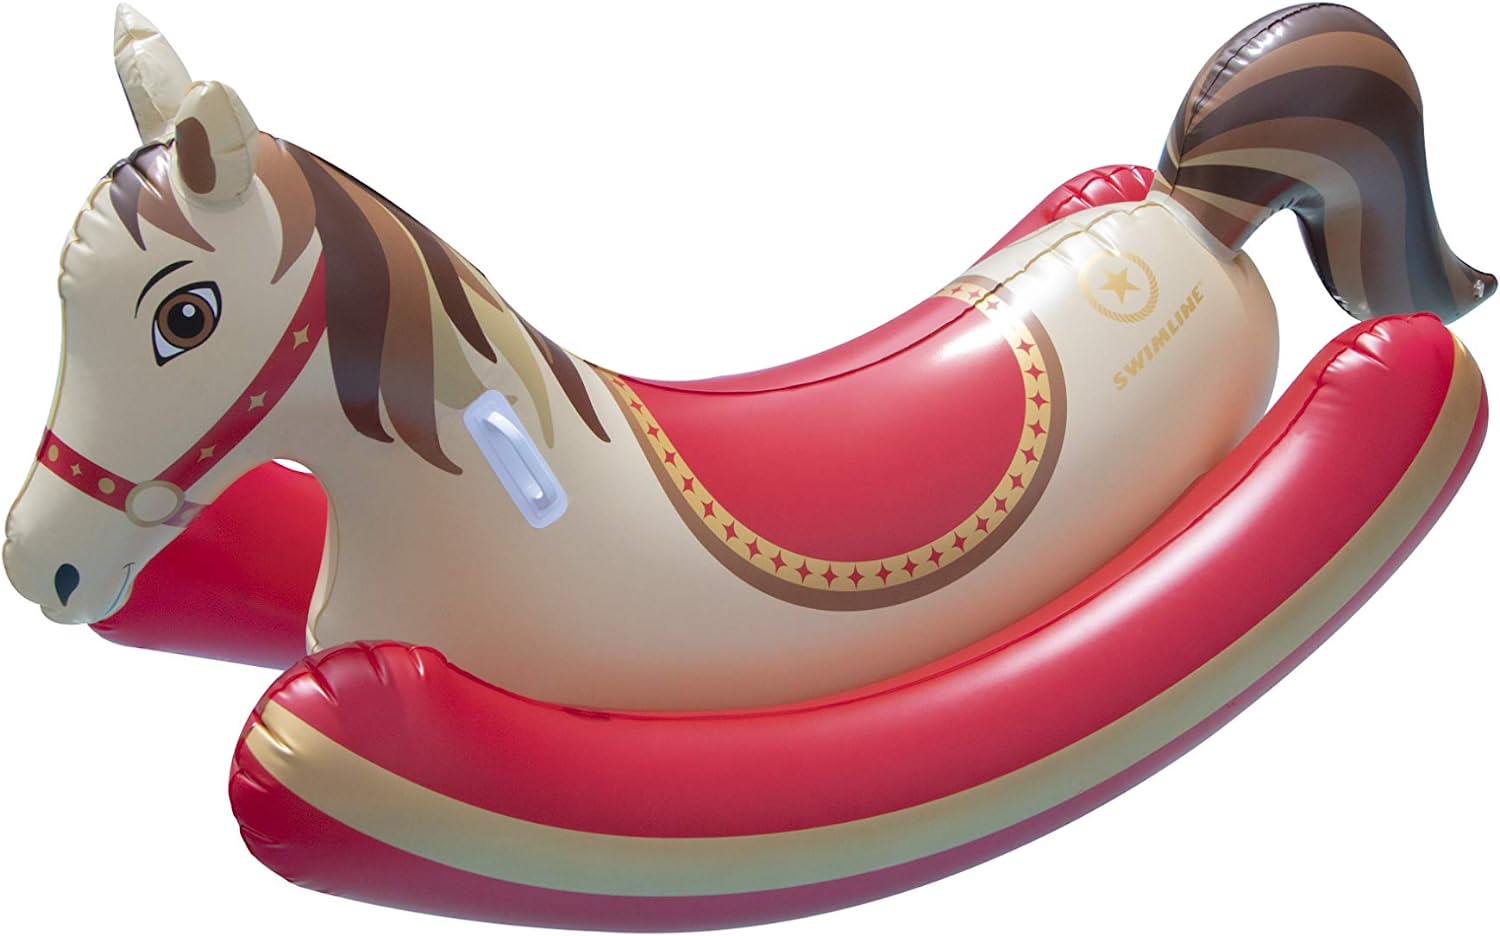 Swimline Hobby Horse Inflatable Pool Rocker, Multi, 81″ x 36″ x 40″